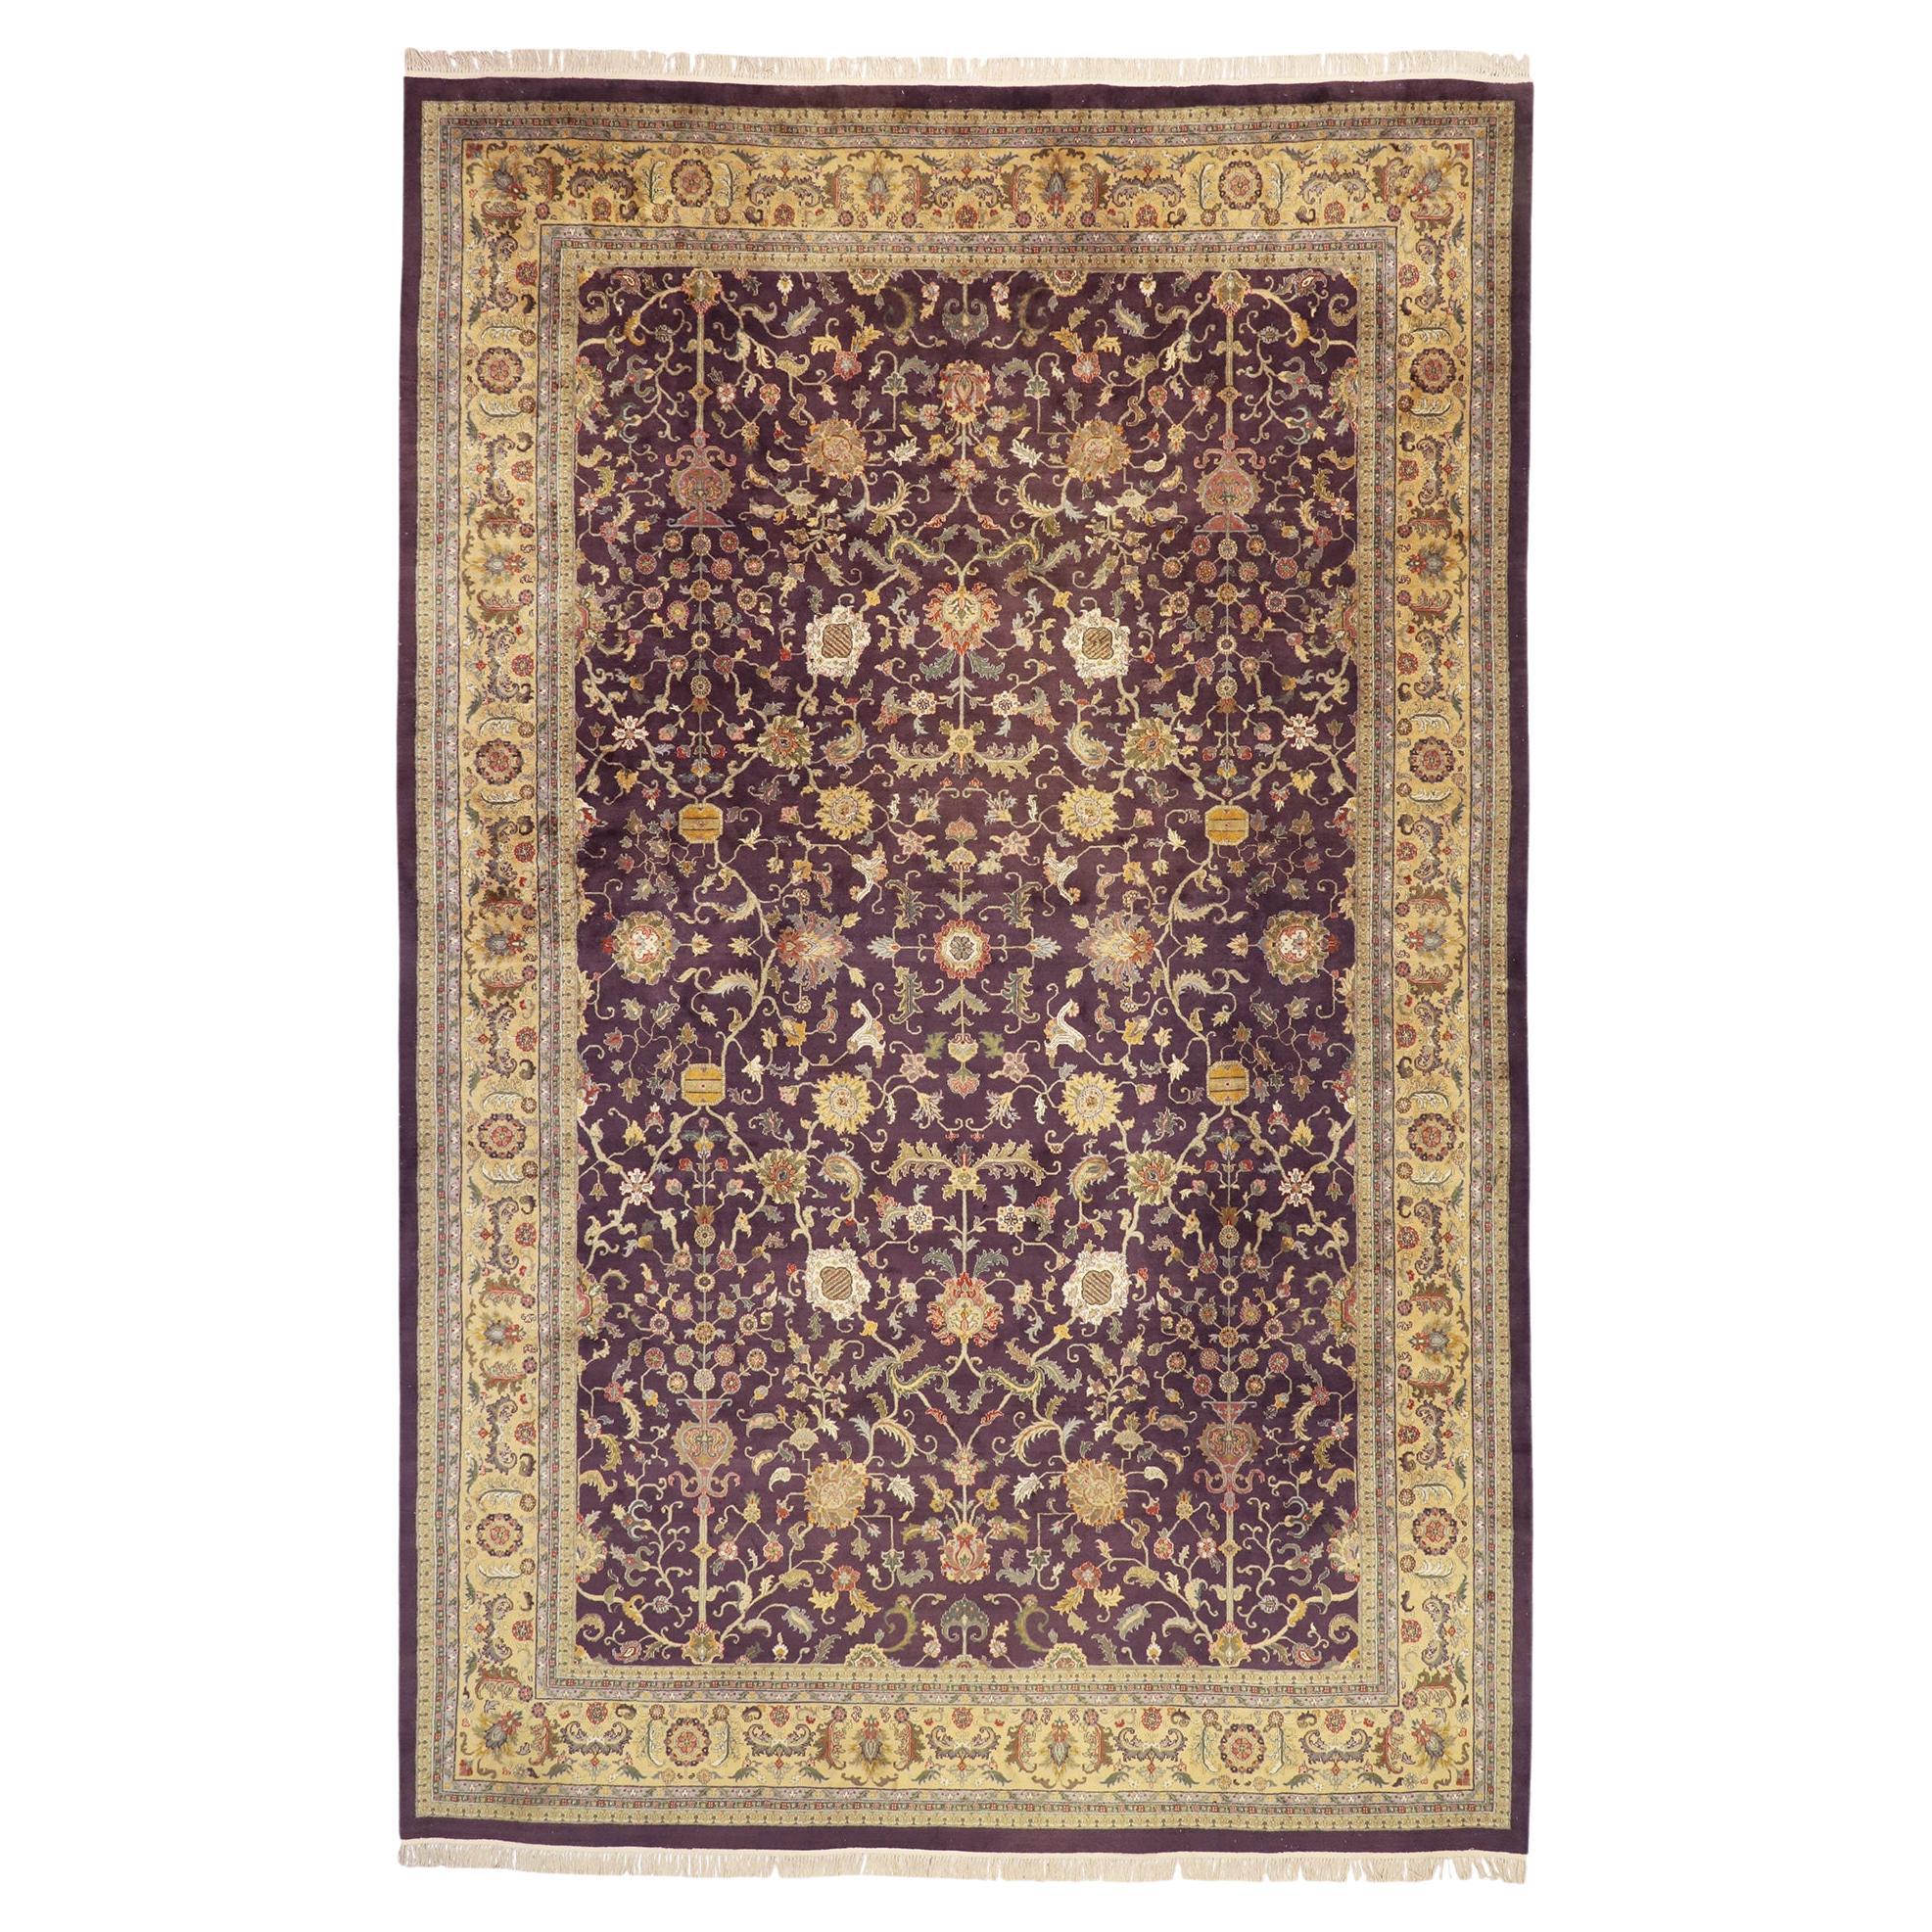 Vintage Aubergine Indian Palatial Carpet, 11'03 x 17'08